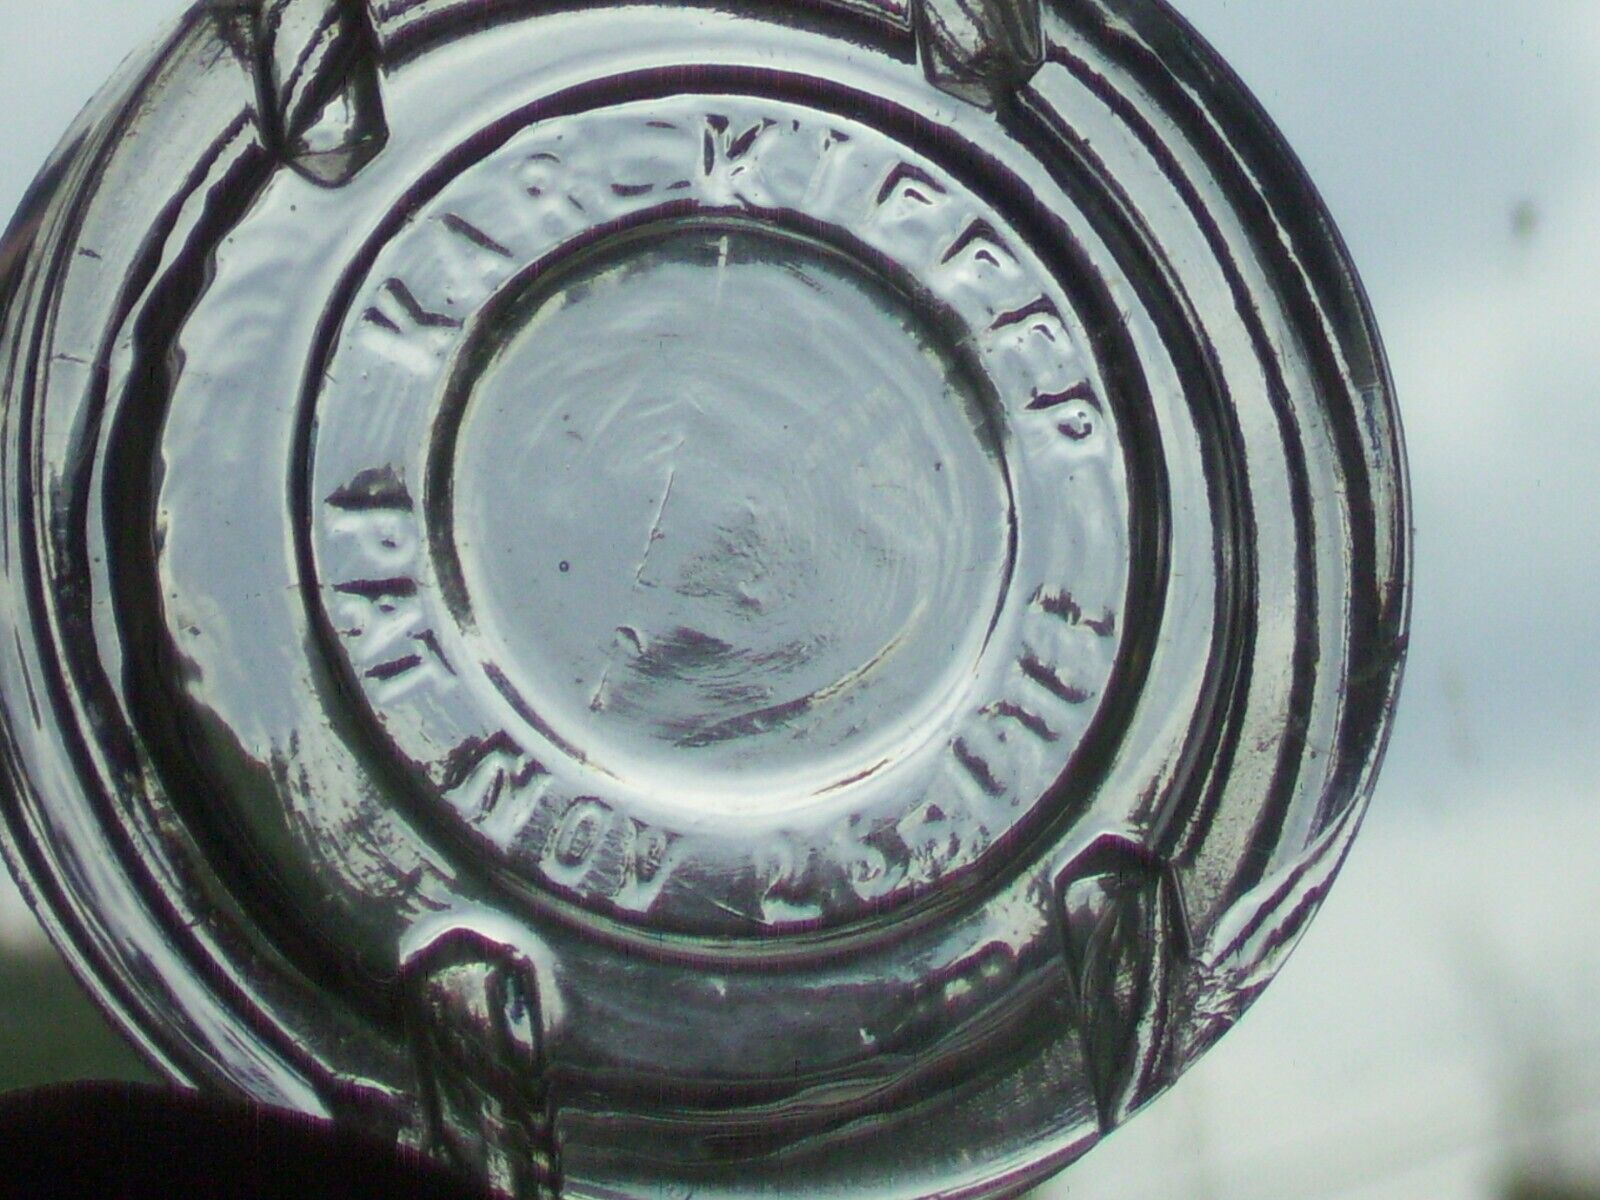 clear glass Karl Keffer Pat. Nov. 25, 1913 food jar lid. nicks in the glass